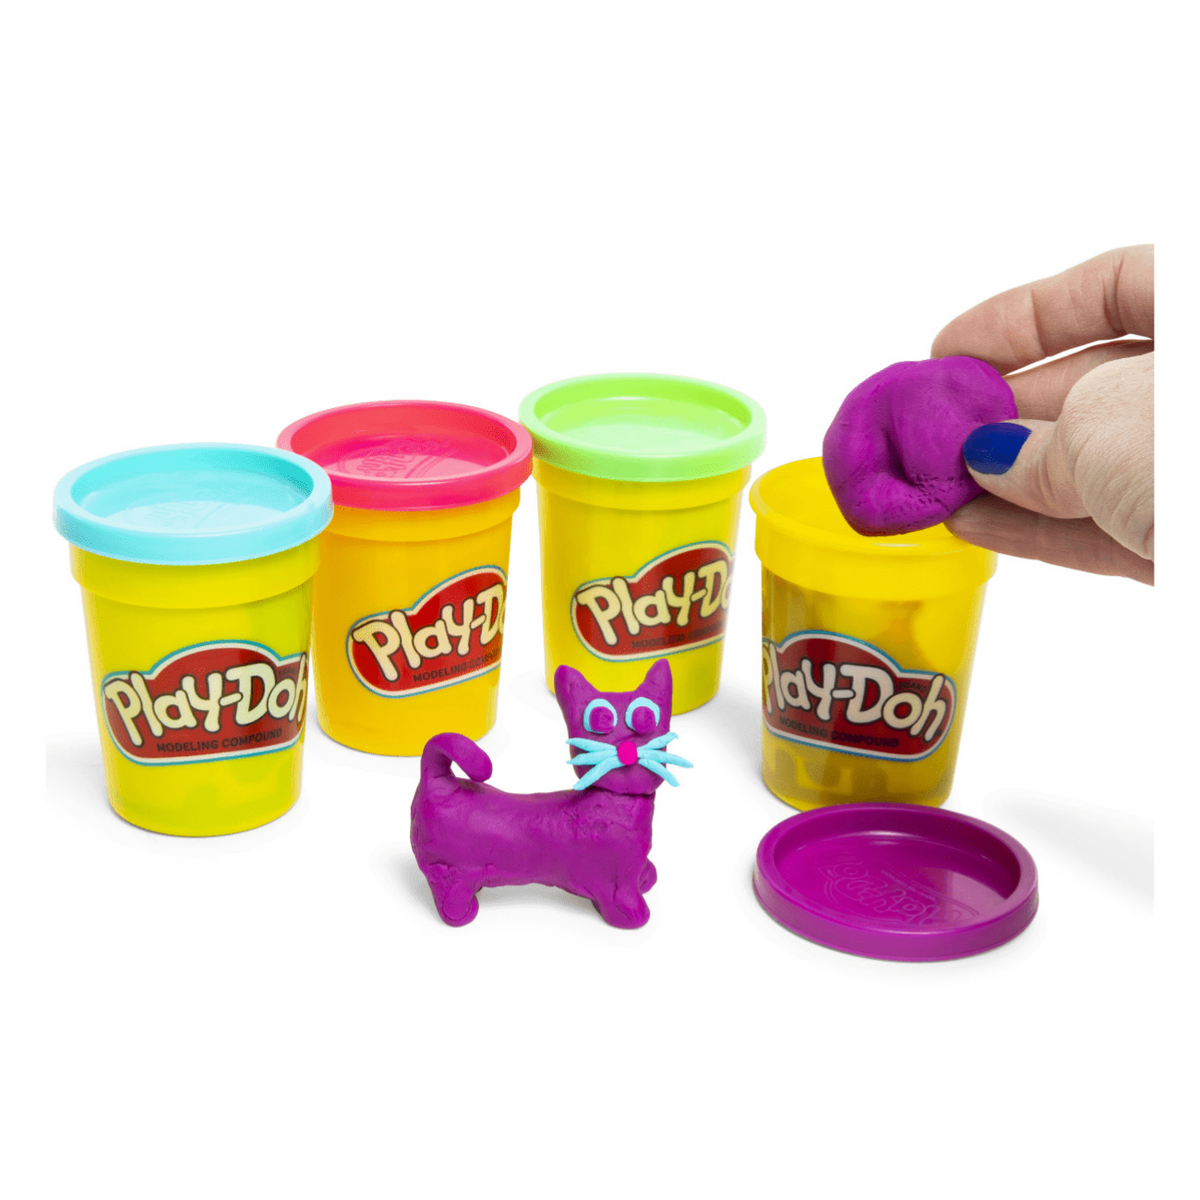 Promo Playdoh Set 4 colours 448gr Play-Doh 4 warna mainan anak - 1  WE-RD-YW-SB - Warna 2 BL-YG-GR-OR Diskon 33% di Seller DM STORE'S - Karang  Bahagia, Kab. Bekasi